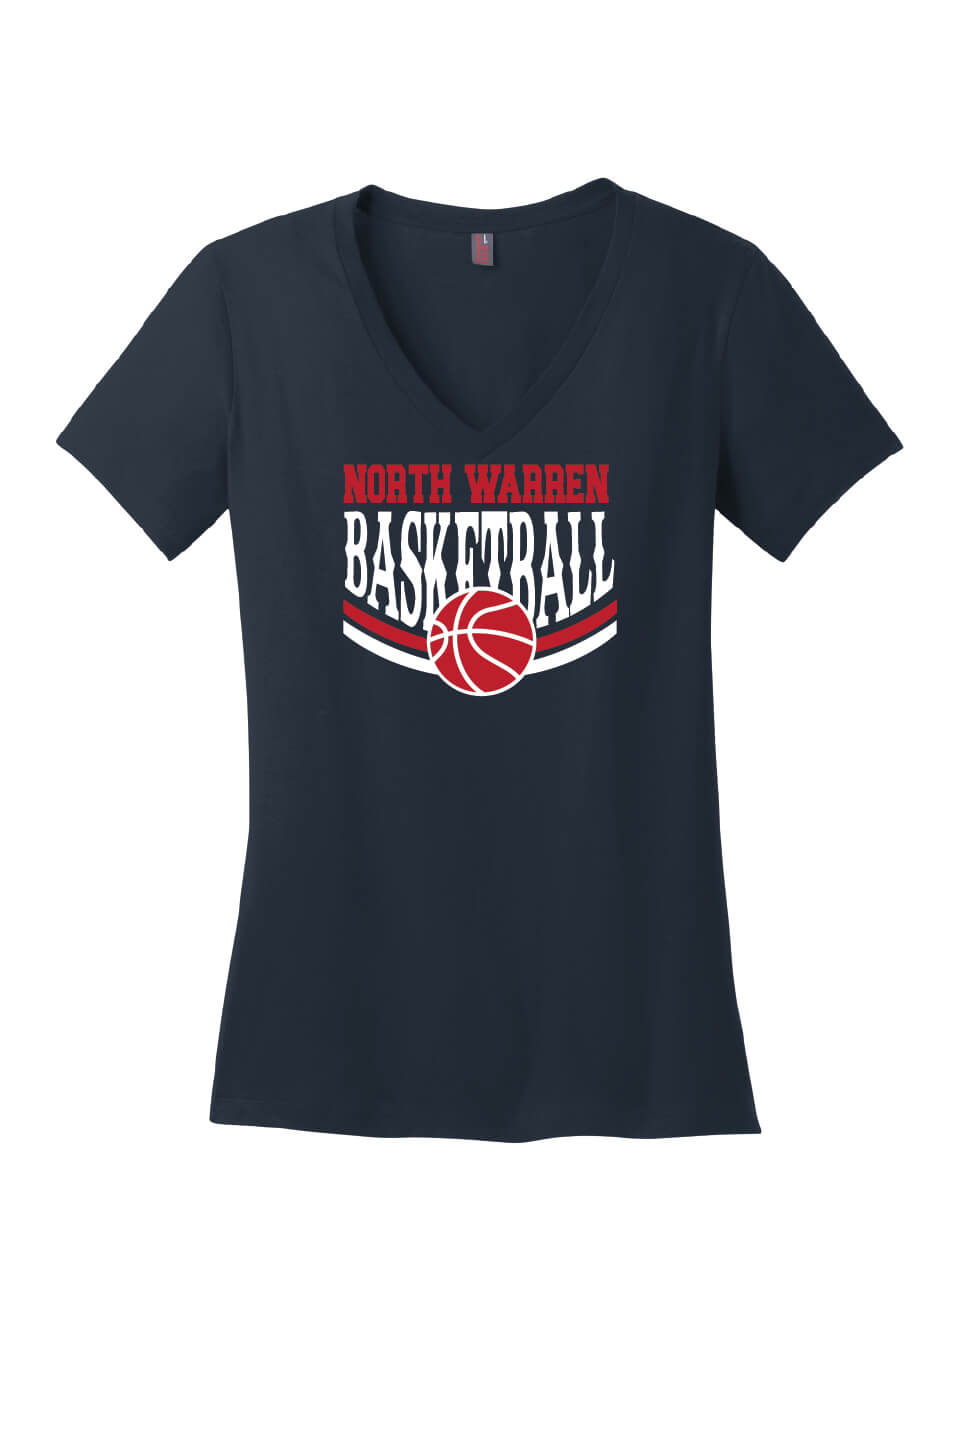 NW Basketball V-Neck Short Sleeve T-Shirt (Ladies) navy